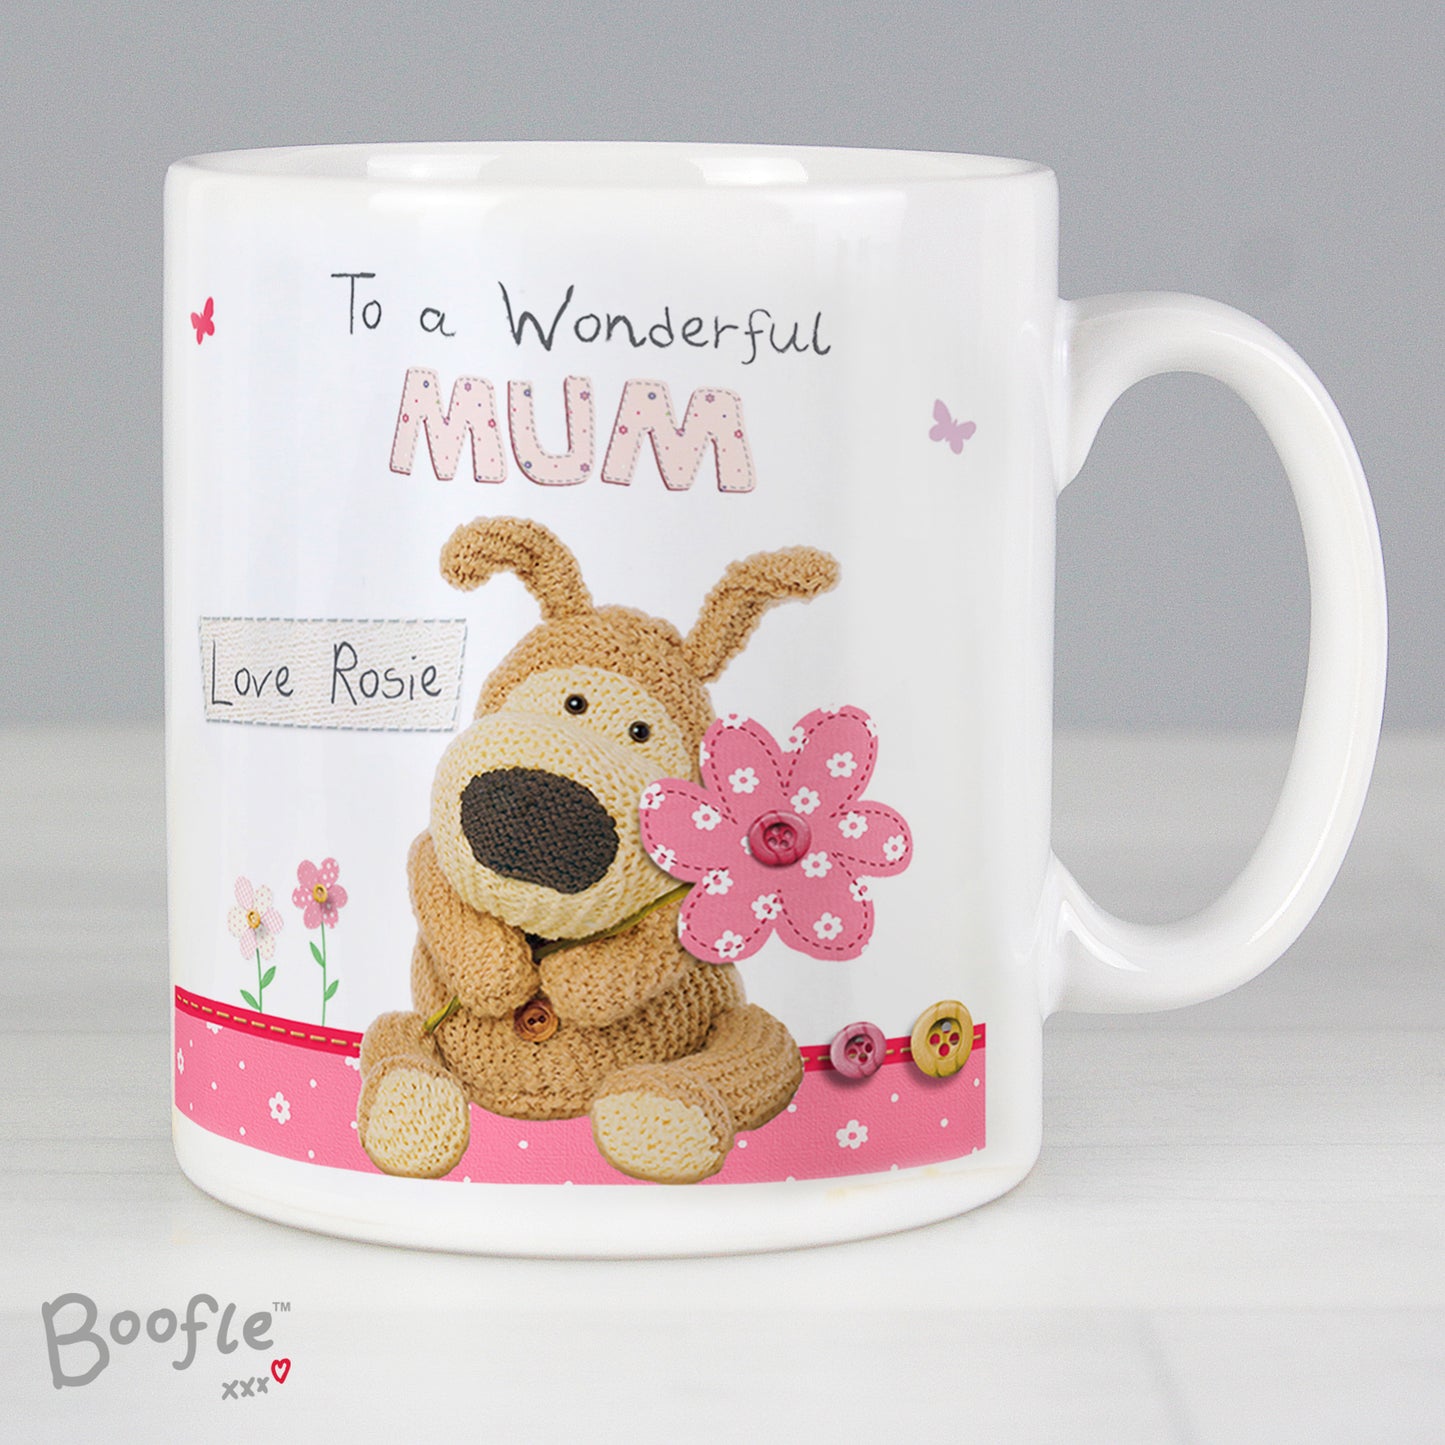 Personalised Boofle Flowers Mug - Personalise It!